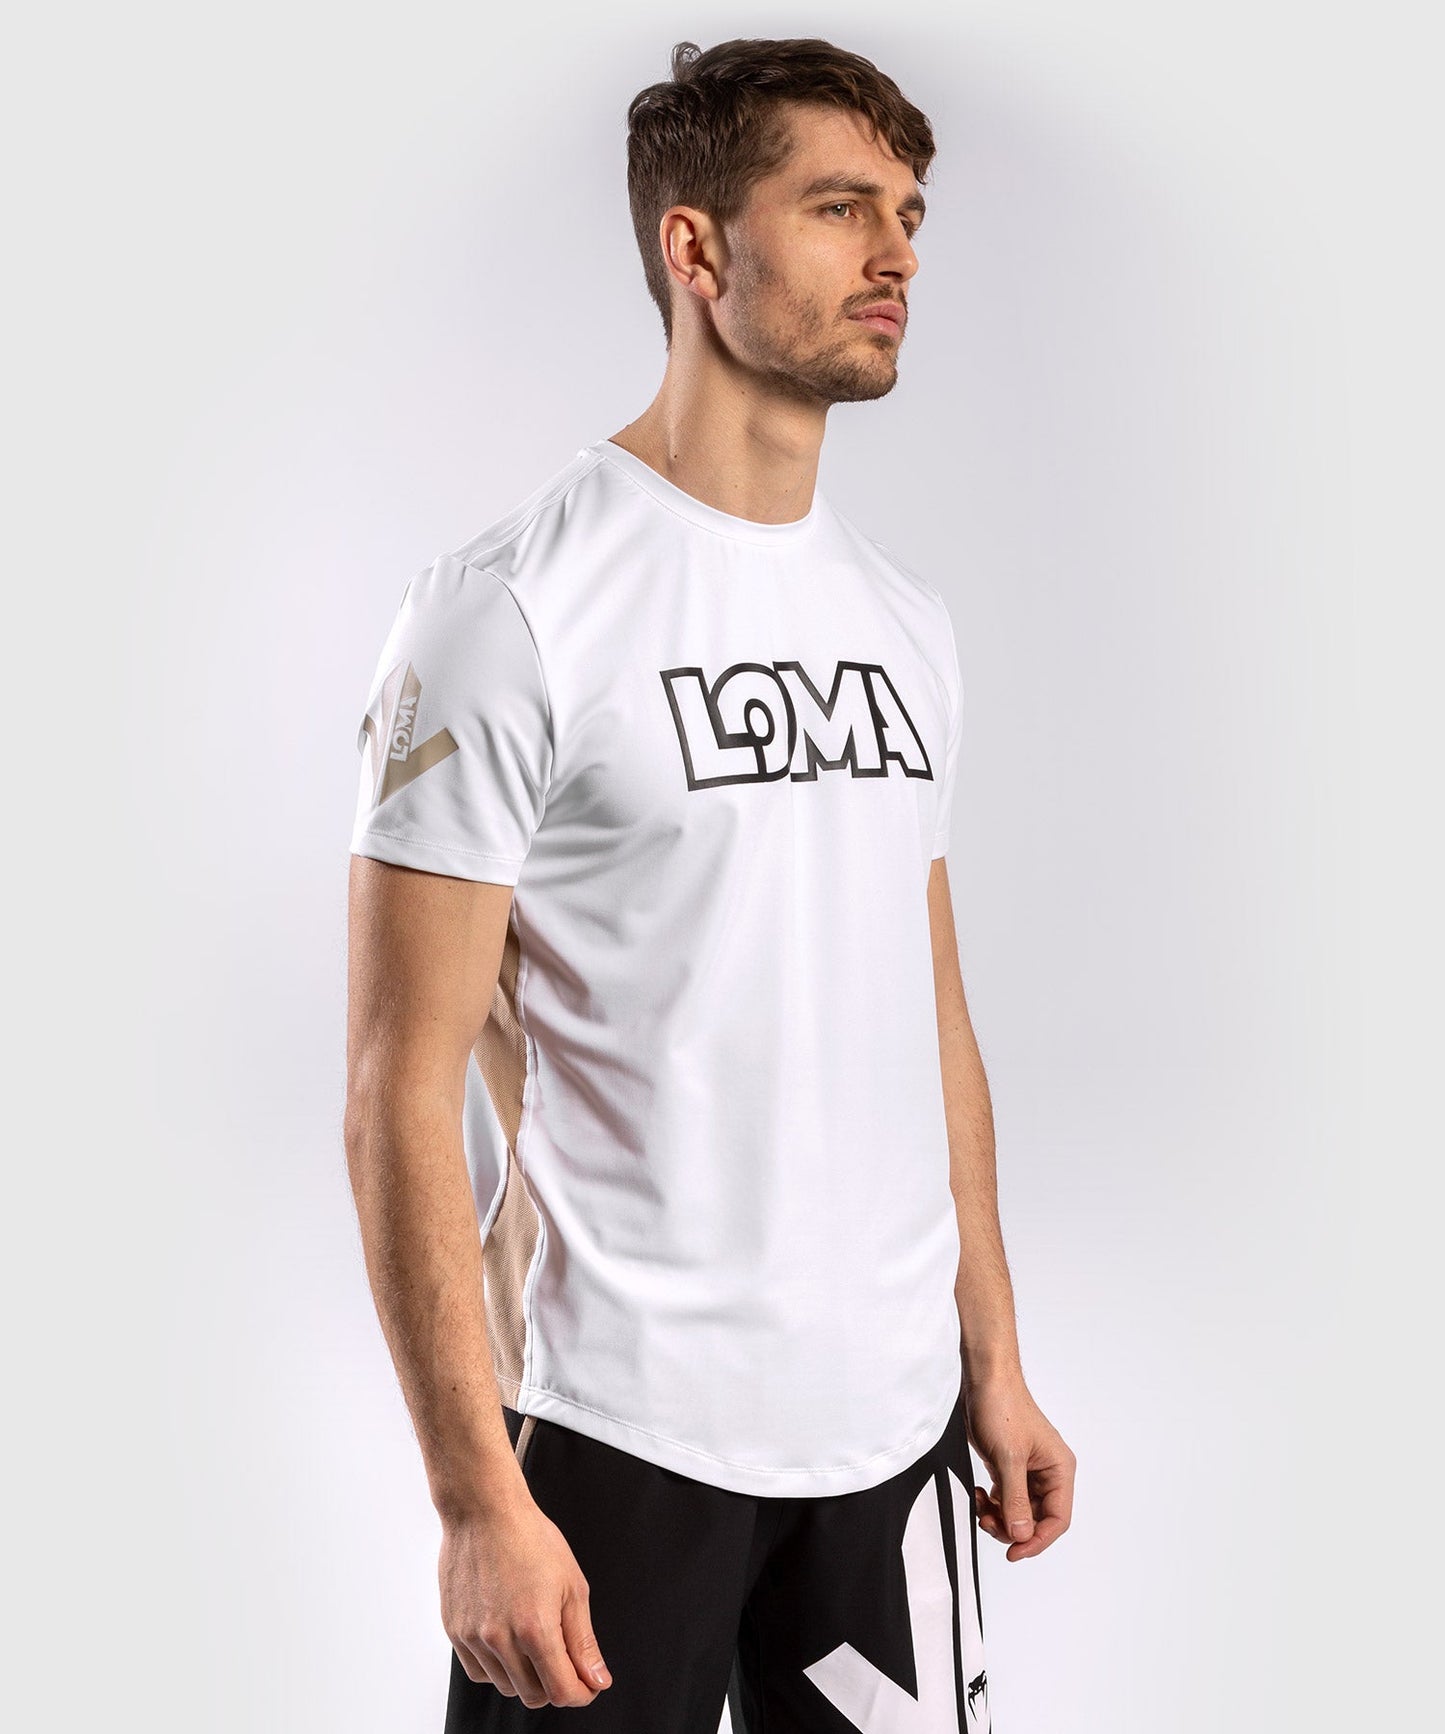 Venum Origins Dry Tech T-shirt - White/Black